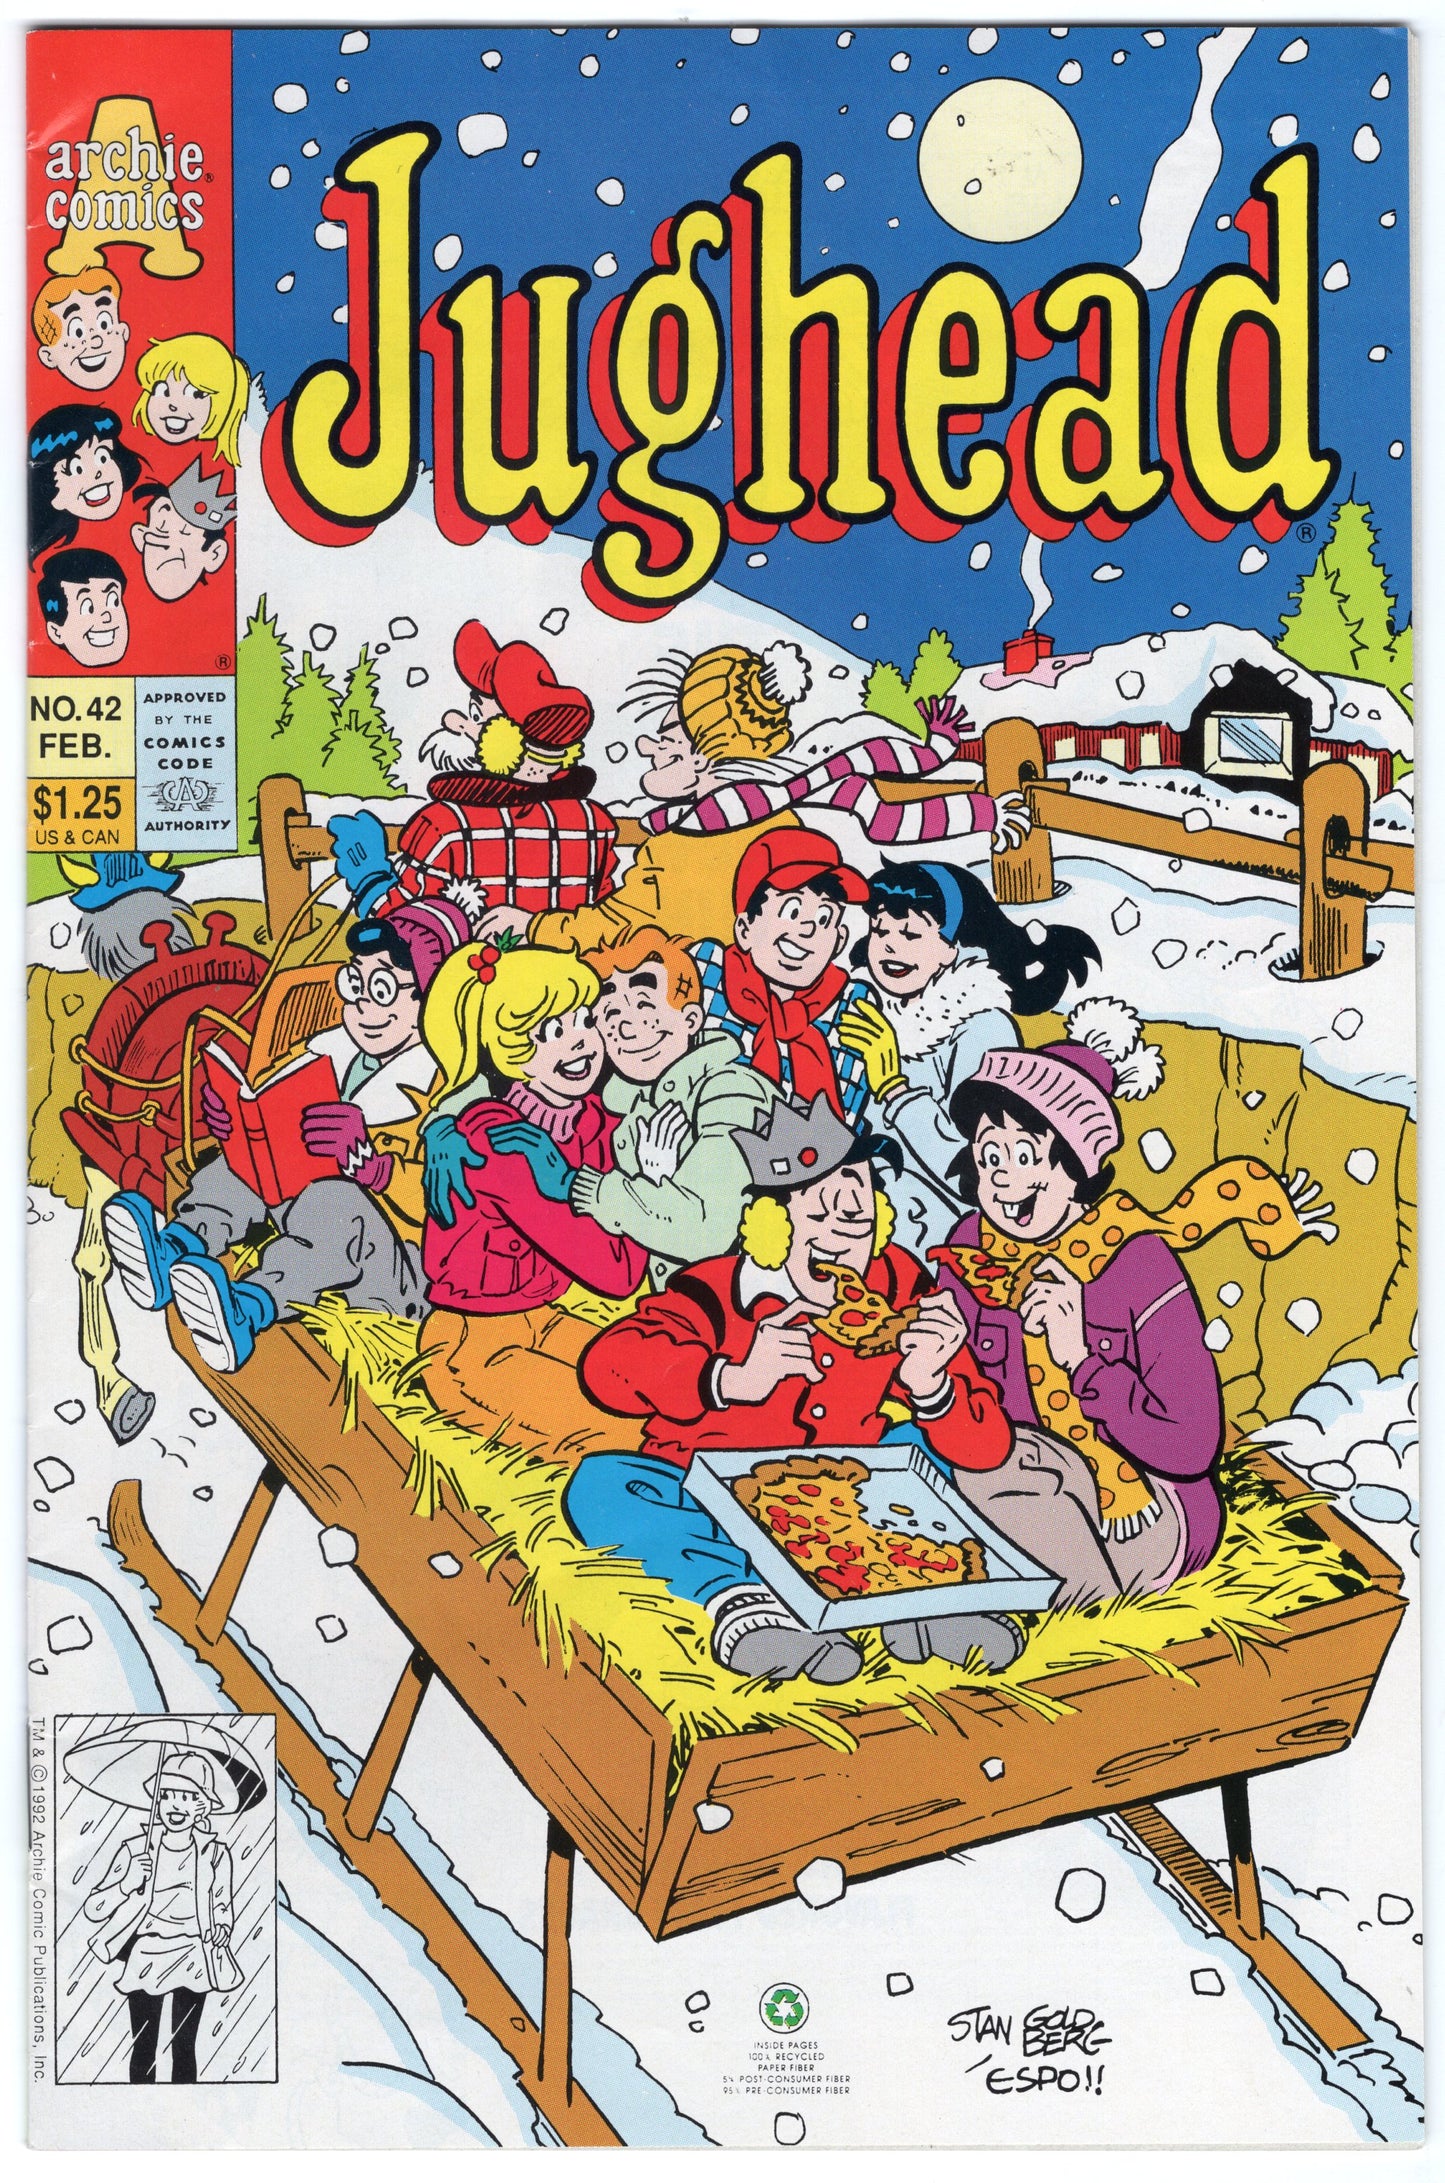 Jughead - Issue #42 (Feb. 1993 - Archie Comics) FN